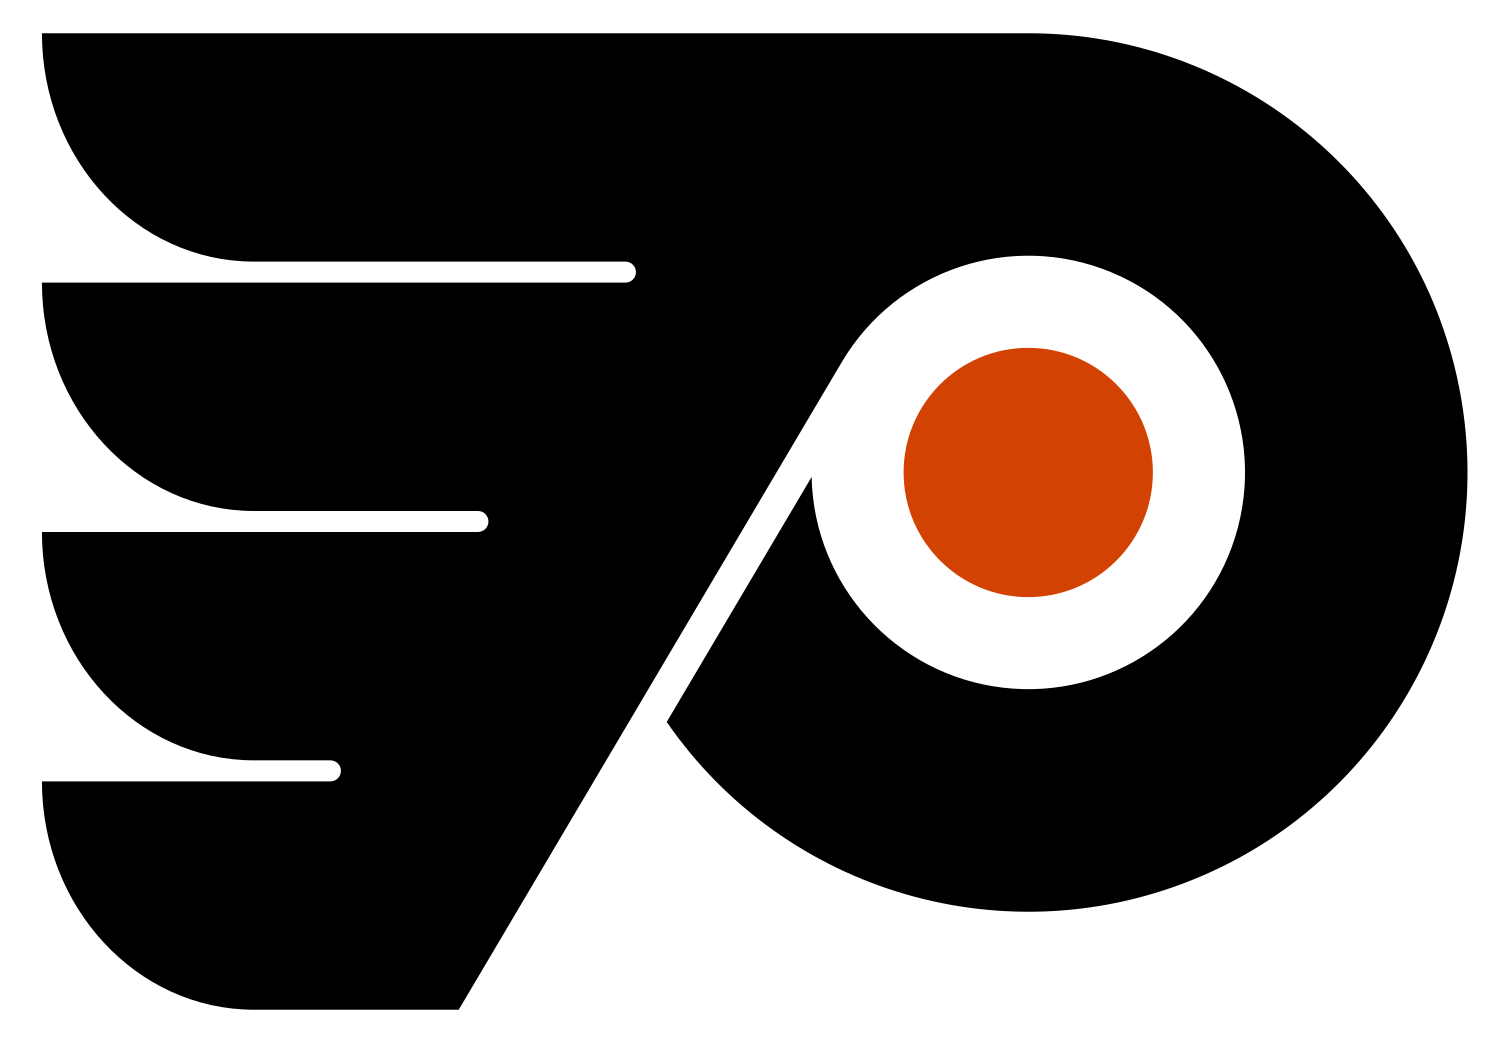 Seeler named Flyers' nominee for NHL's Masterton Trophy